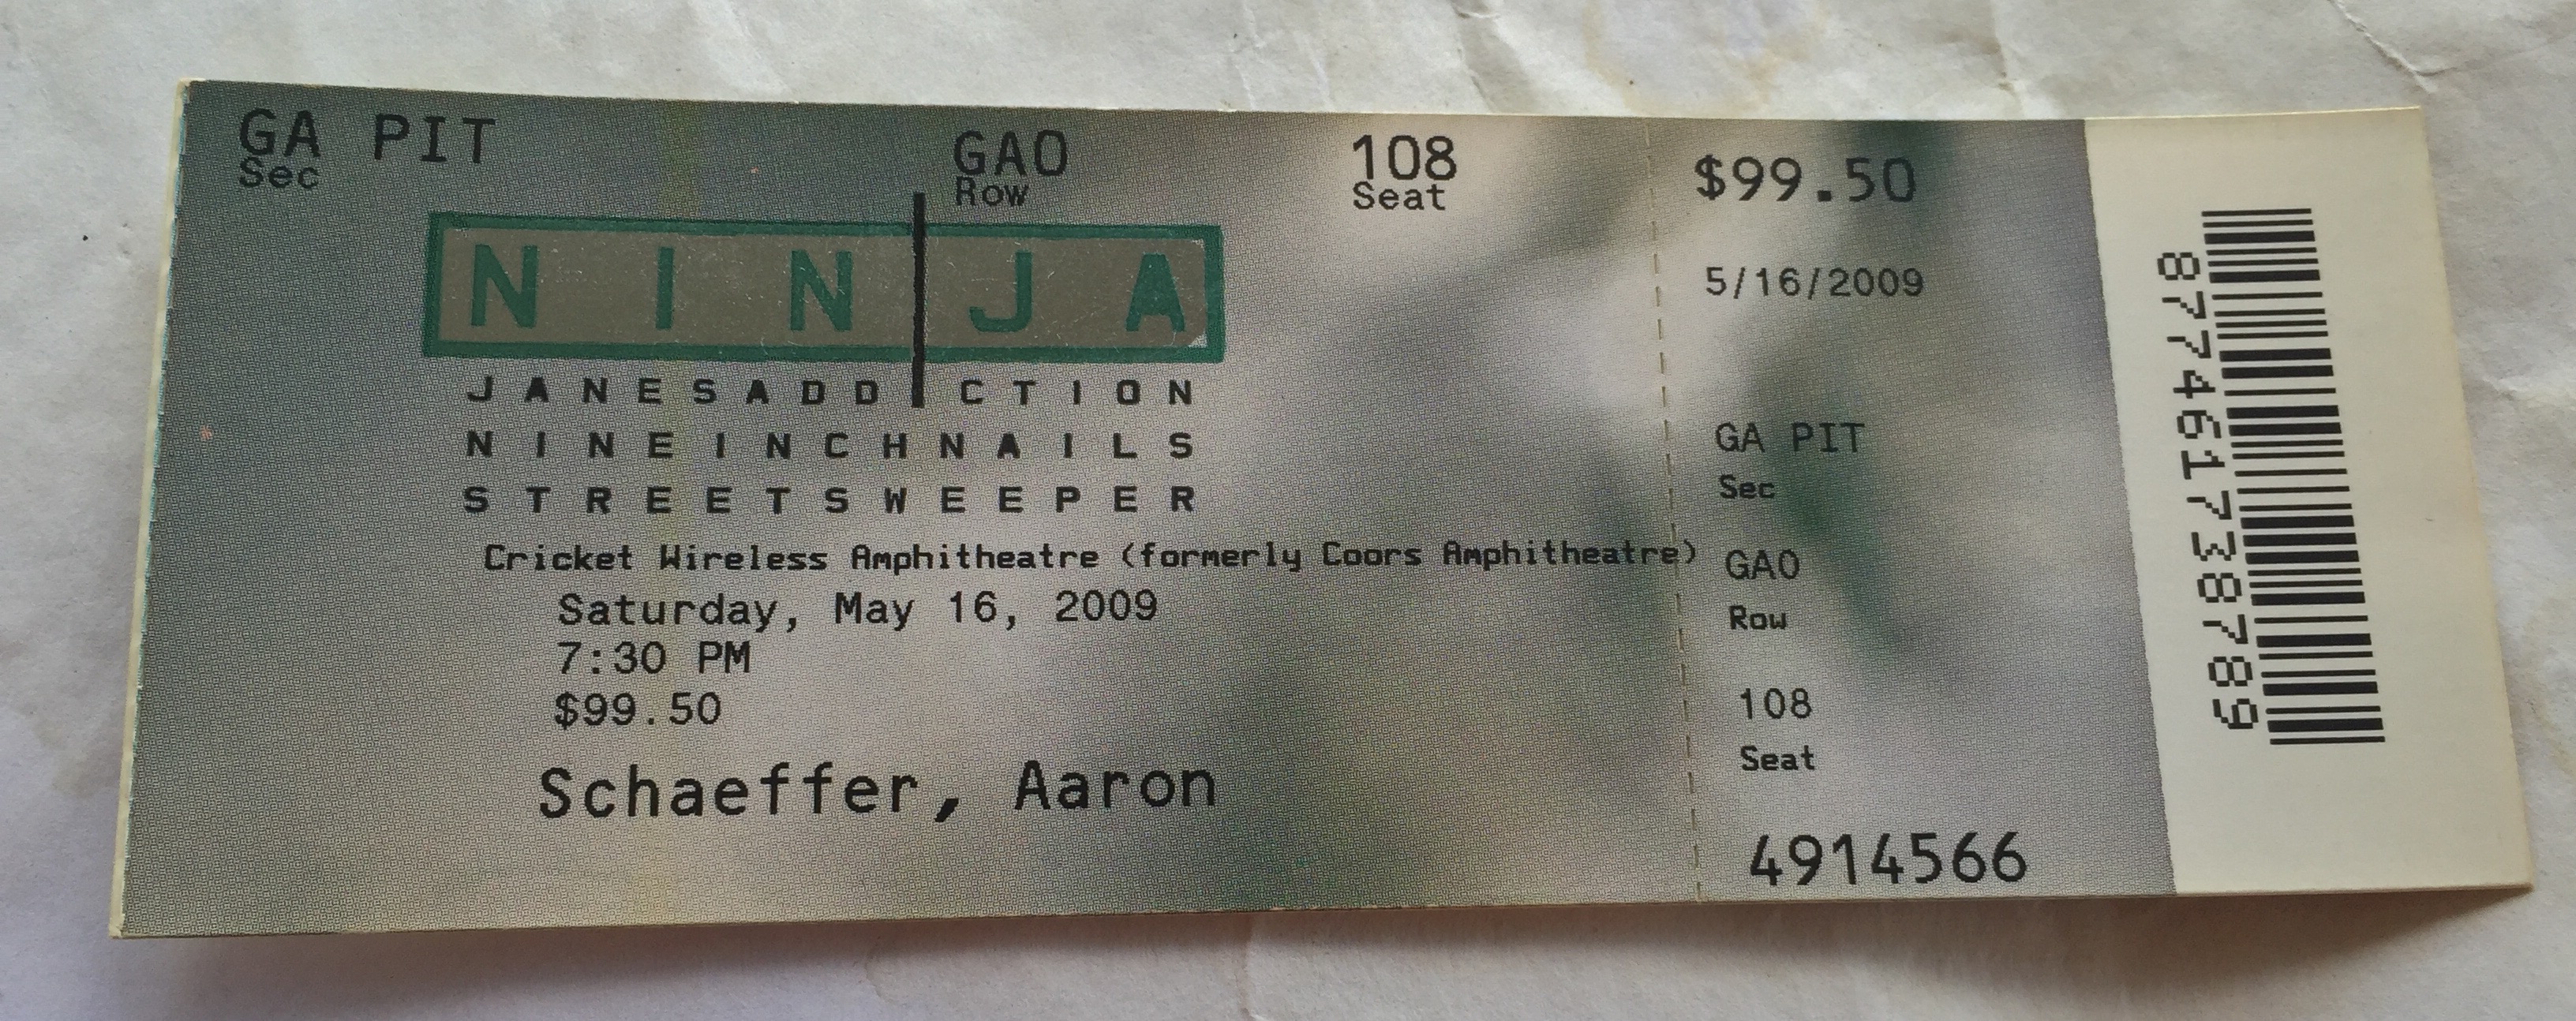 2009/05/16 Ticket